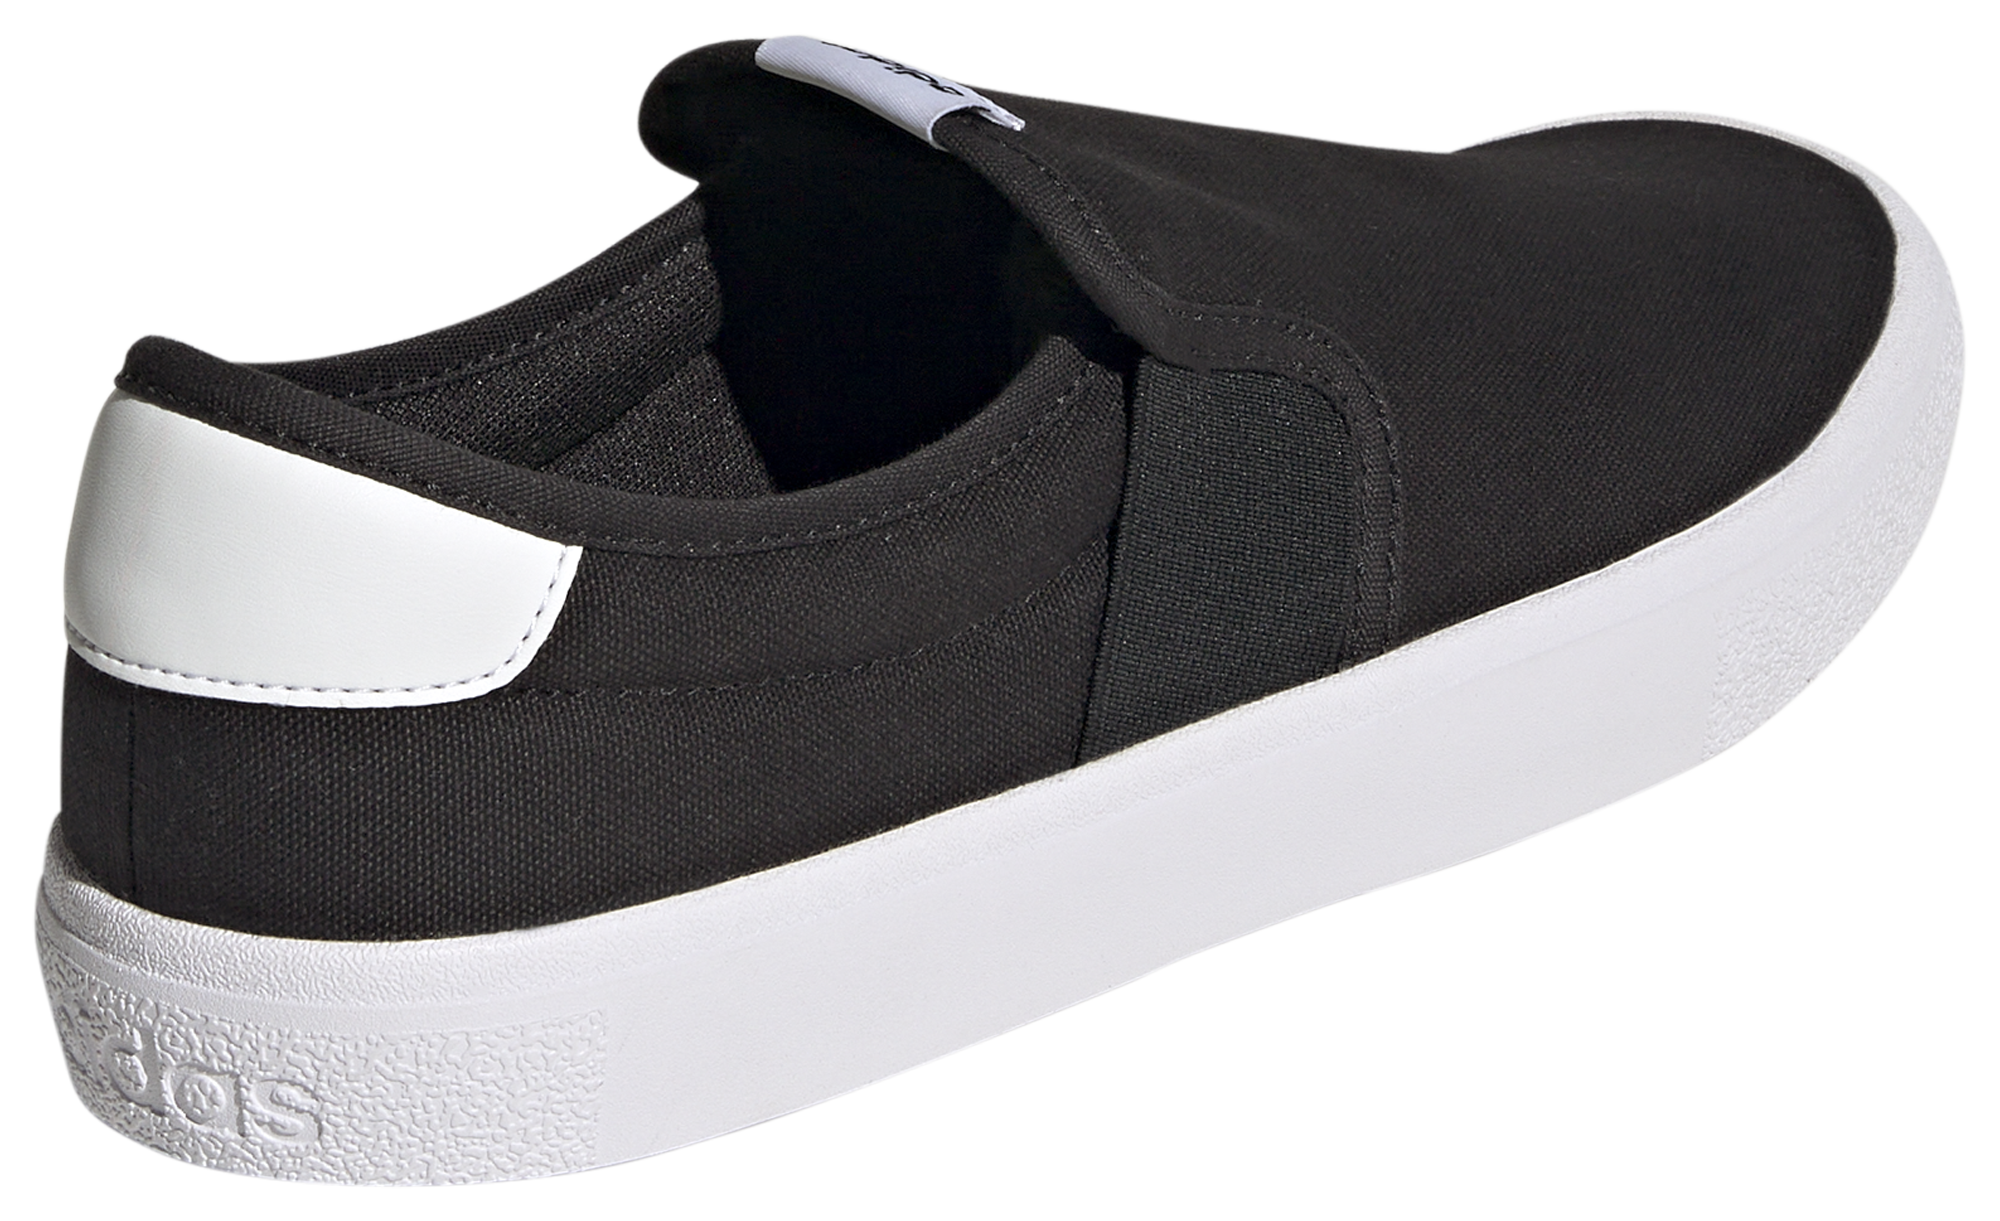 adidas Vulc Raid3r Slip-on Skateboarding Canvas Shoes